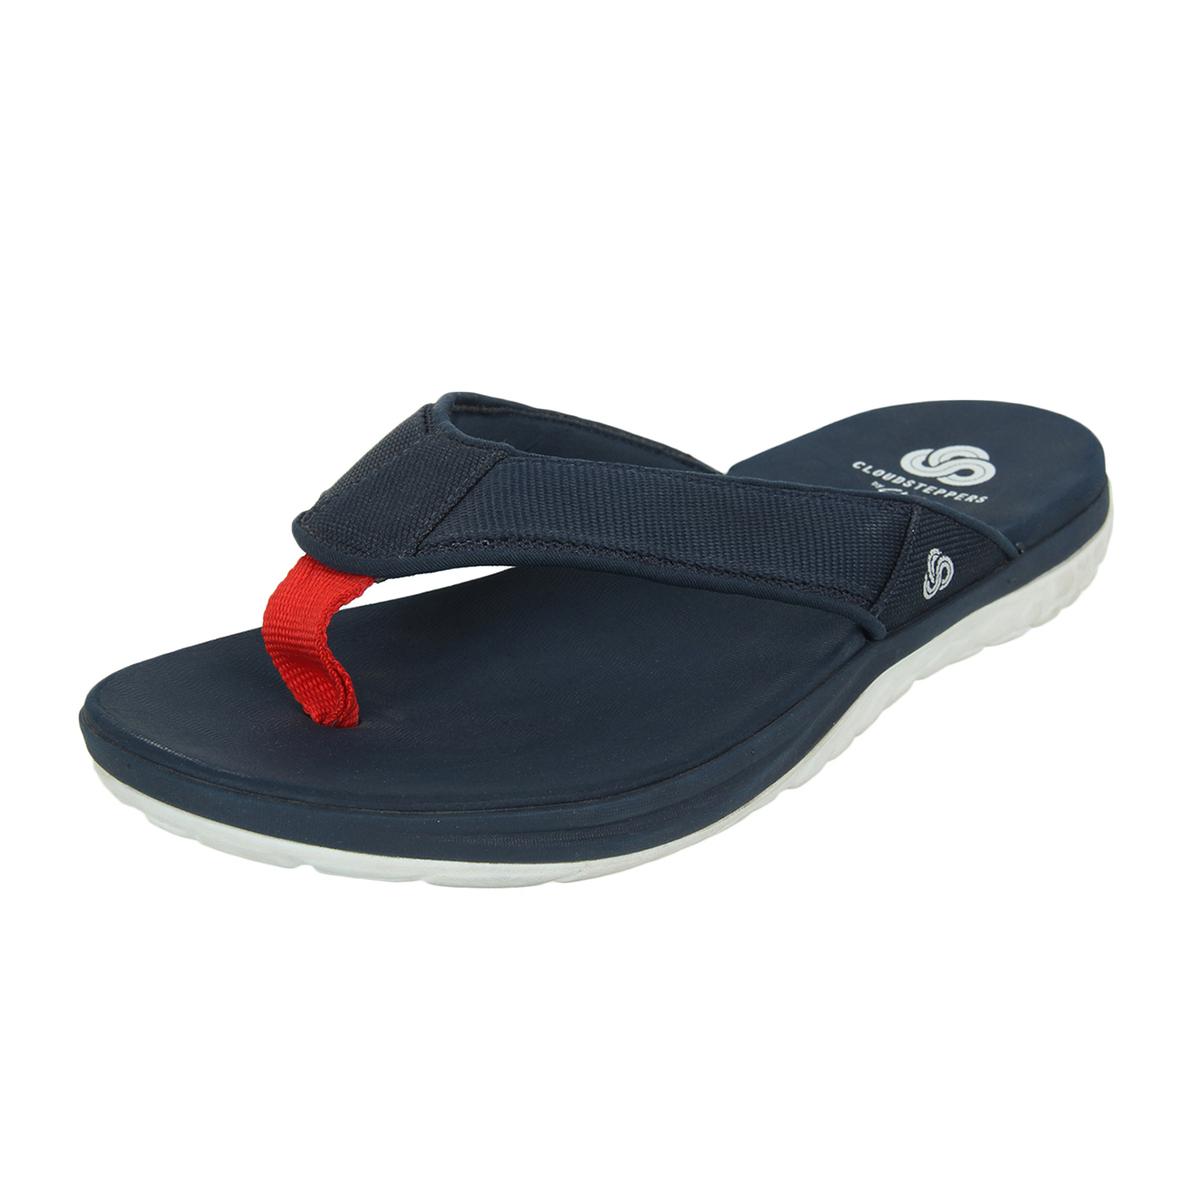 Clarks mens sandals Shopping Online In Pakistan